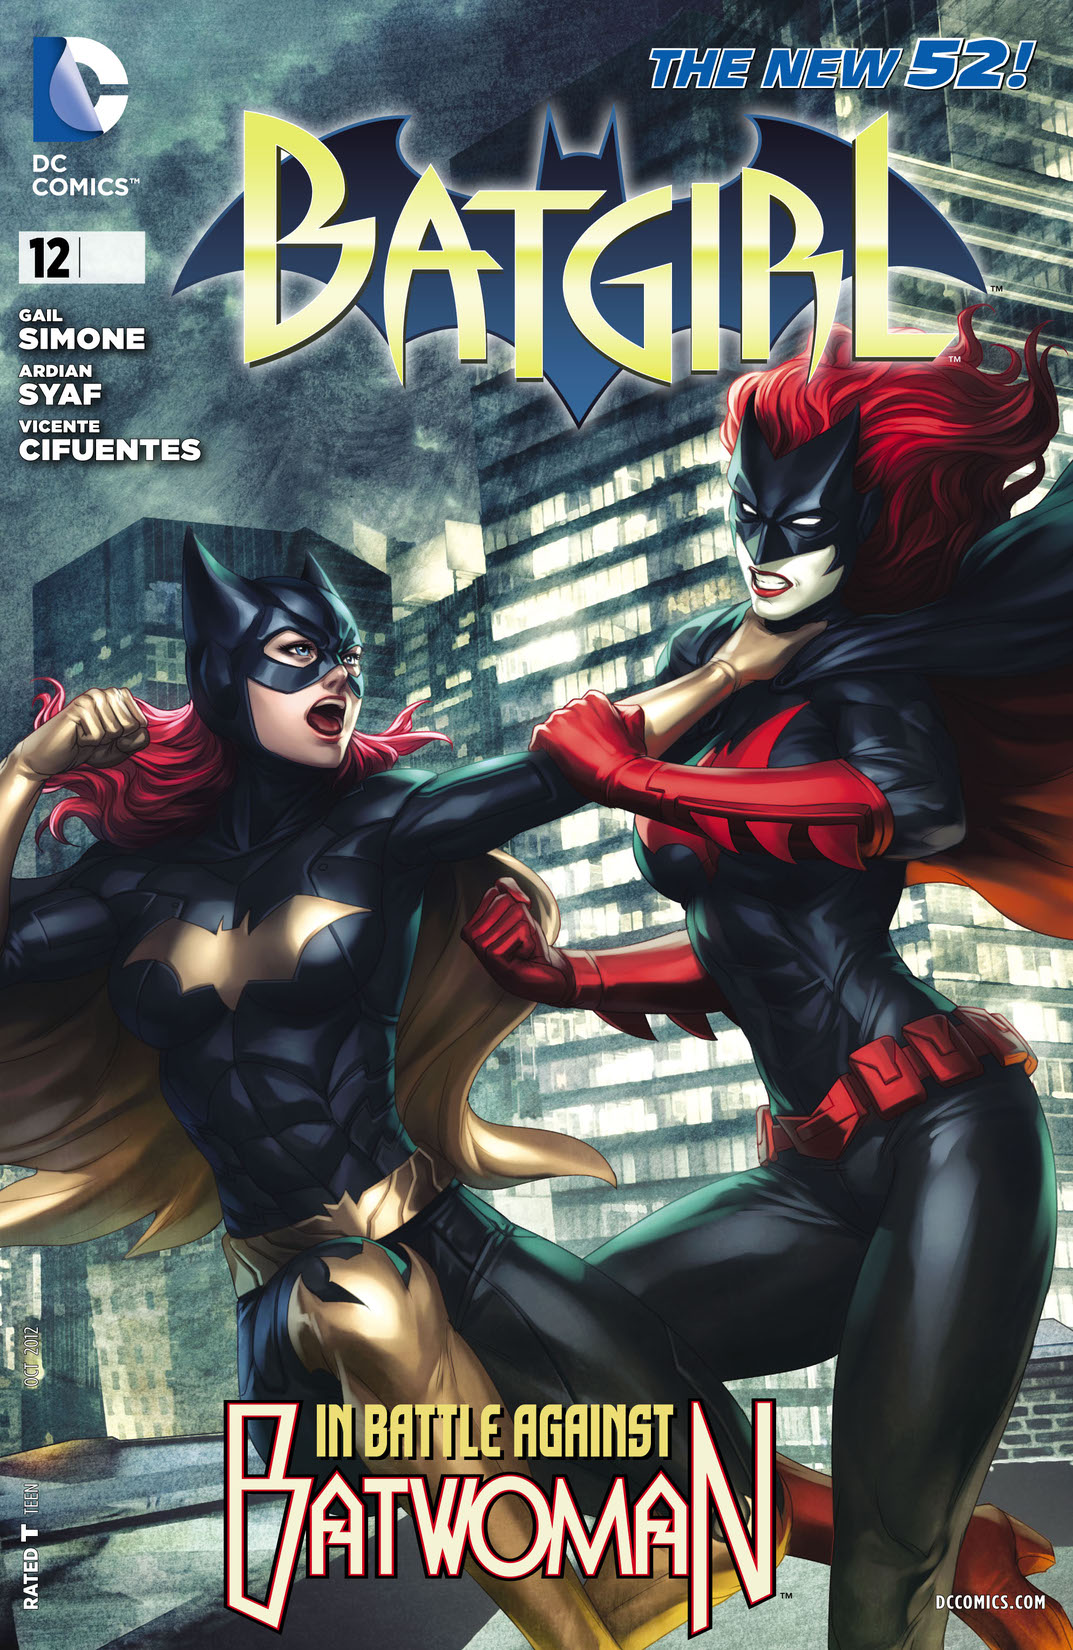 Batgirl (2011-) #12 preview images